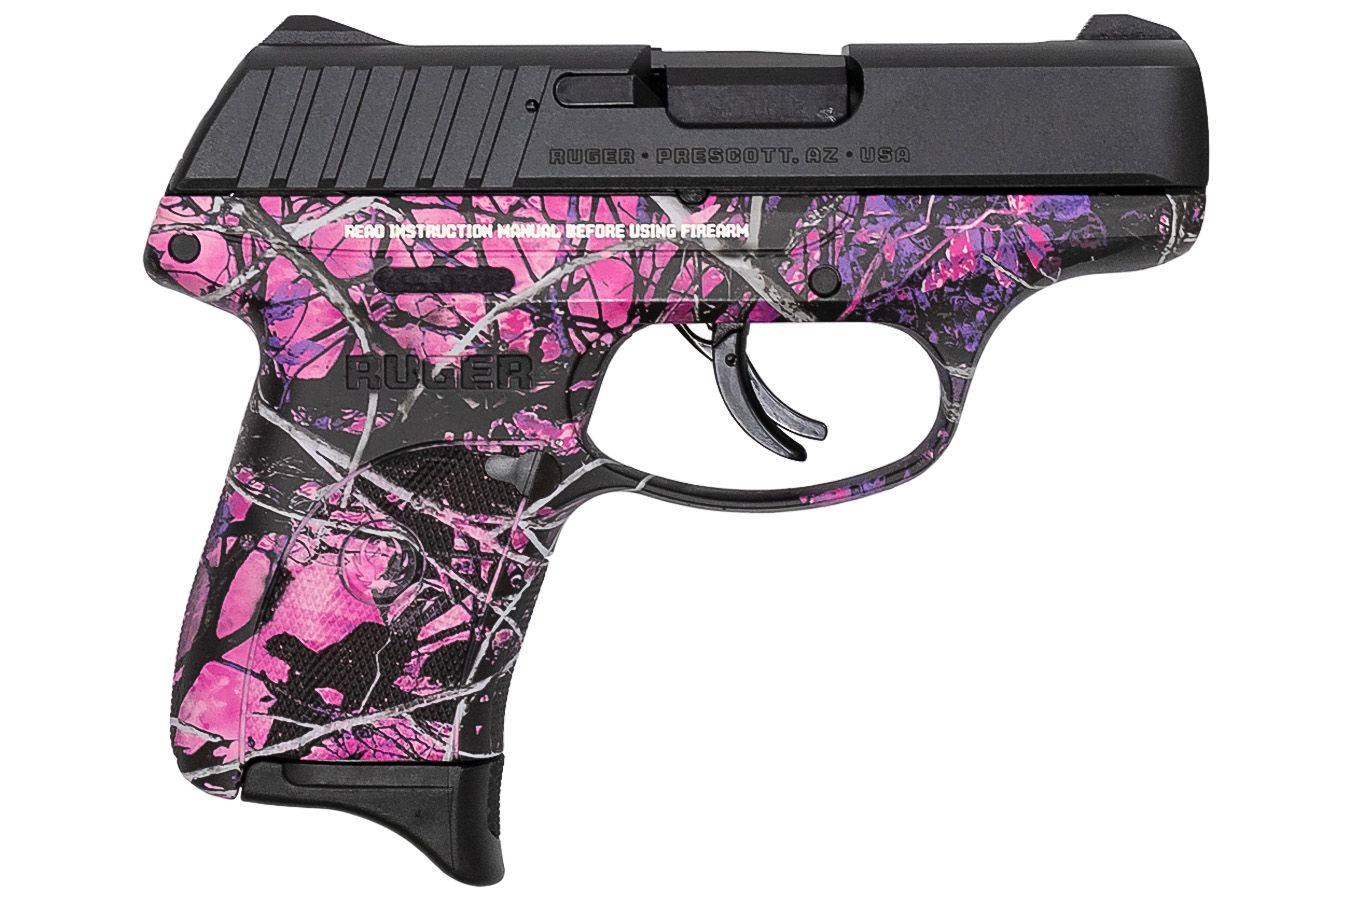 Shop Ruger EC9s 9mm Pistol with Muddy Girl Camo Frame for Sale Online